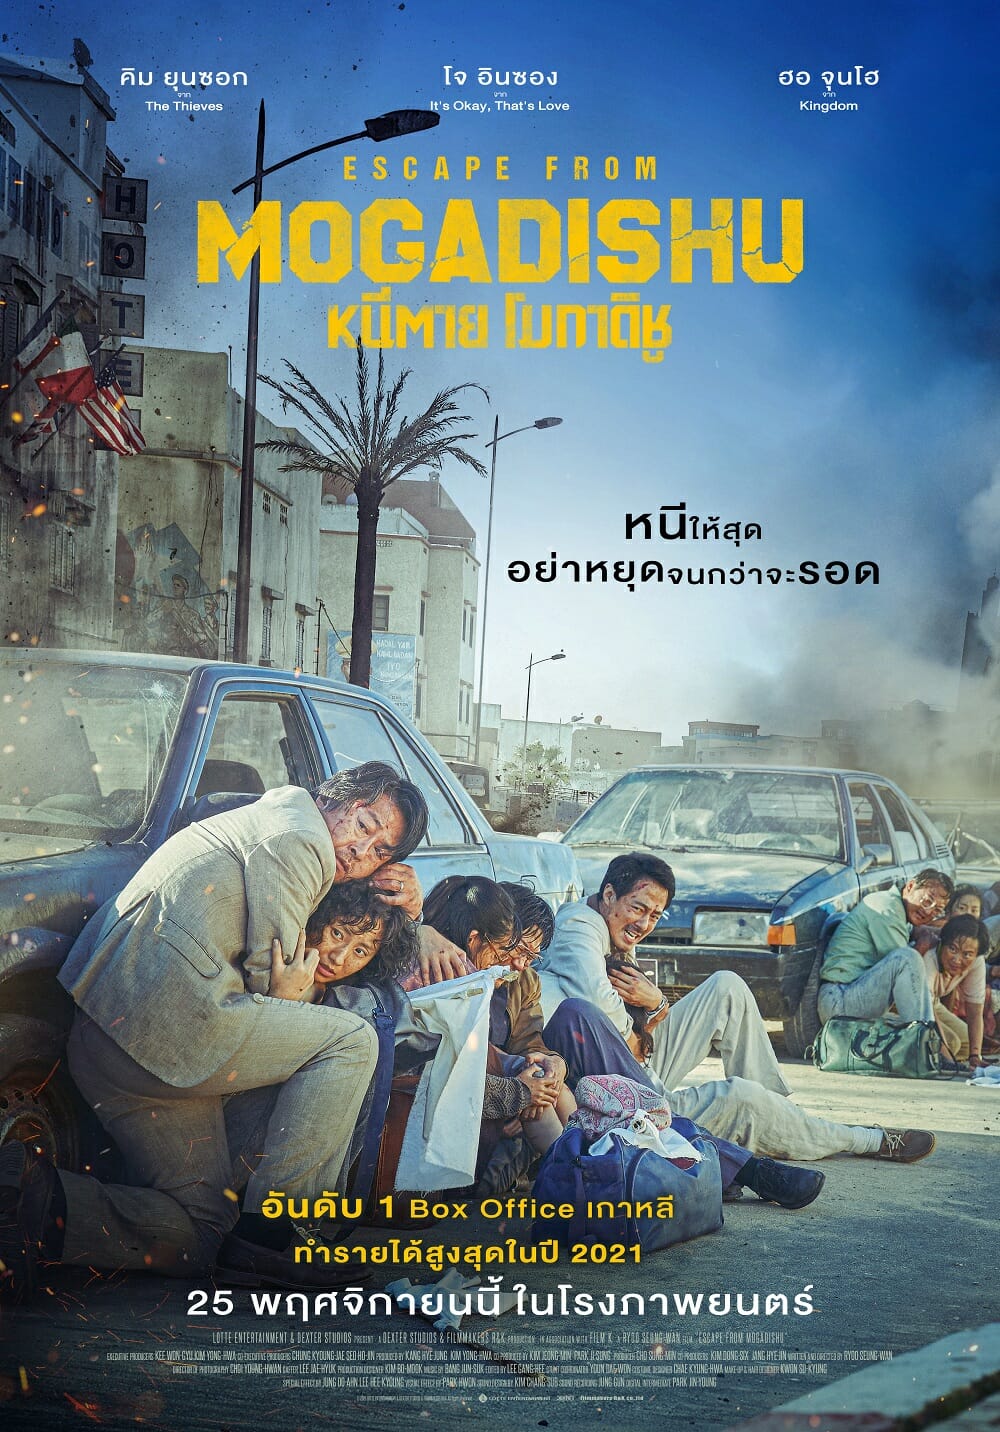 ESCAPE FROM MOGADISHU "โจ อินซอง" พร้อมพาคุณมุ่งสู่โมกาดิชู! อย่าได้หยุดหนีจนกว่าจะรอด 25 พฤศจิกายนนี้ ในโรงภาพยนตร์ 1